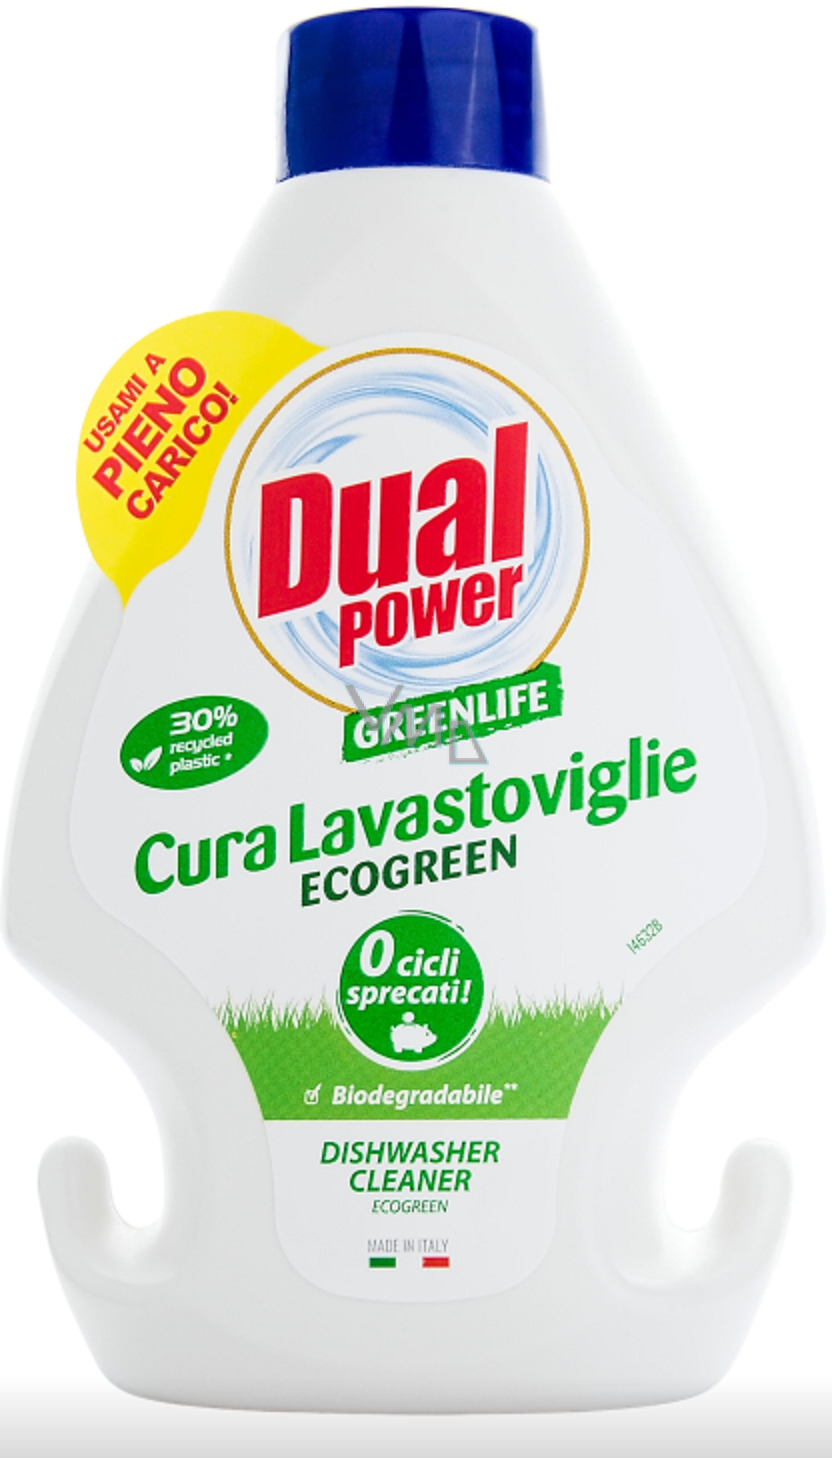 Dual Power Cura Lavastoviglie Greenlife Ecological Dishwasher